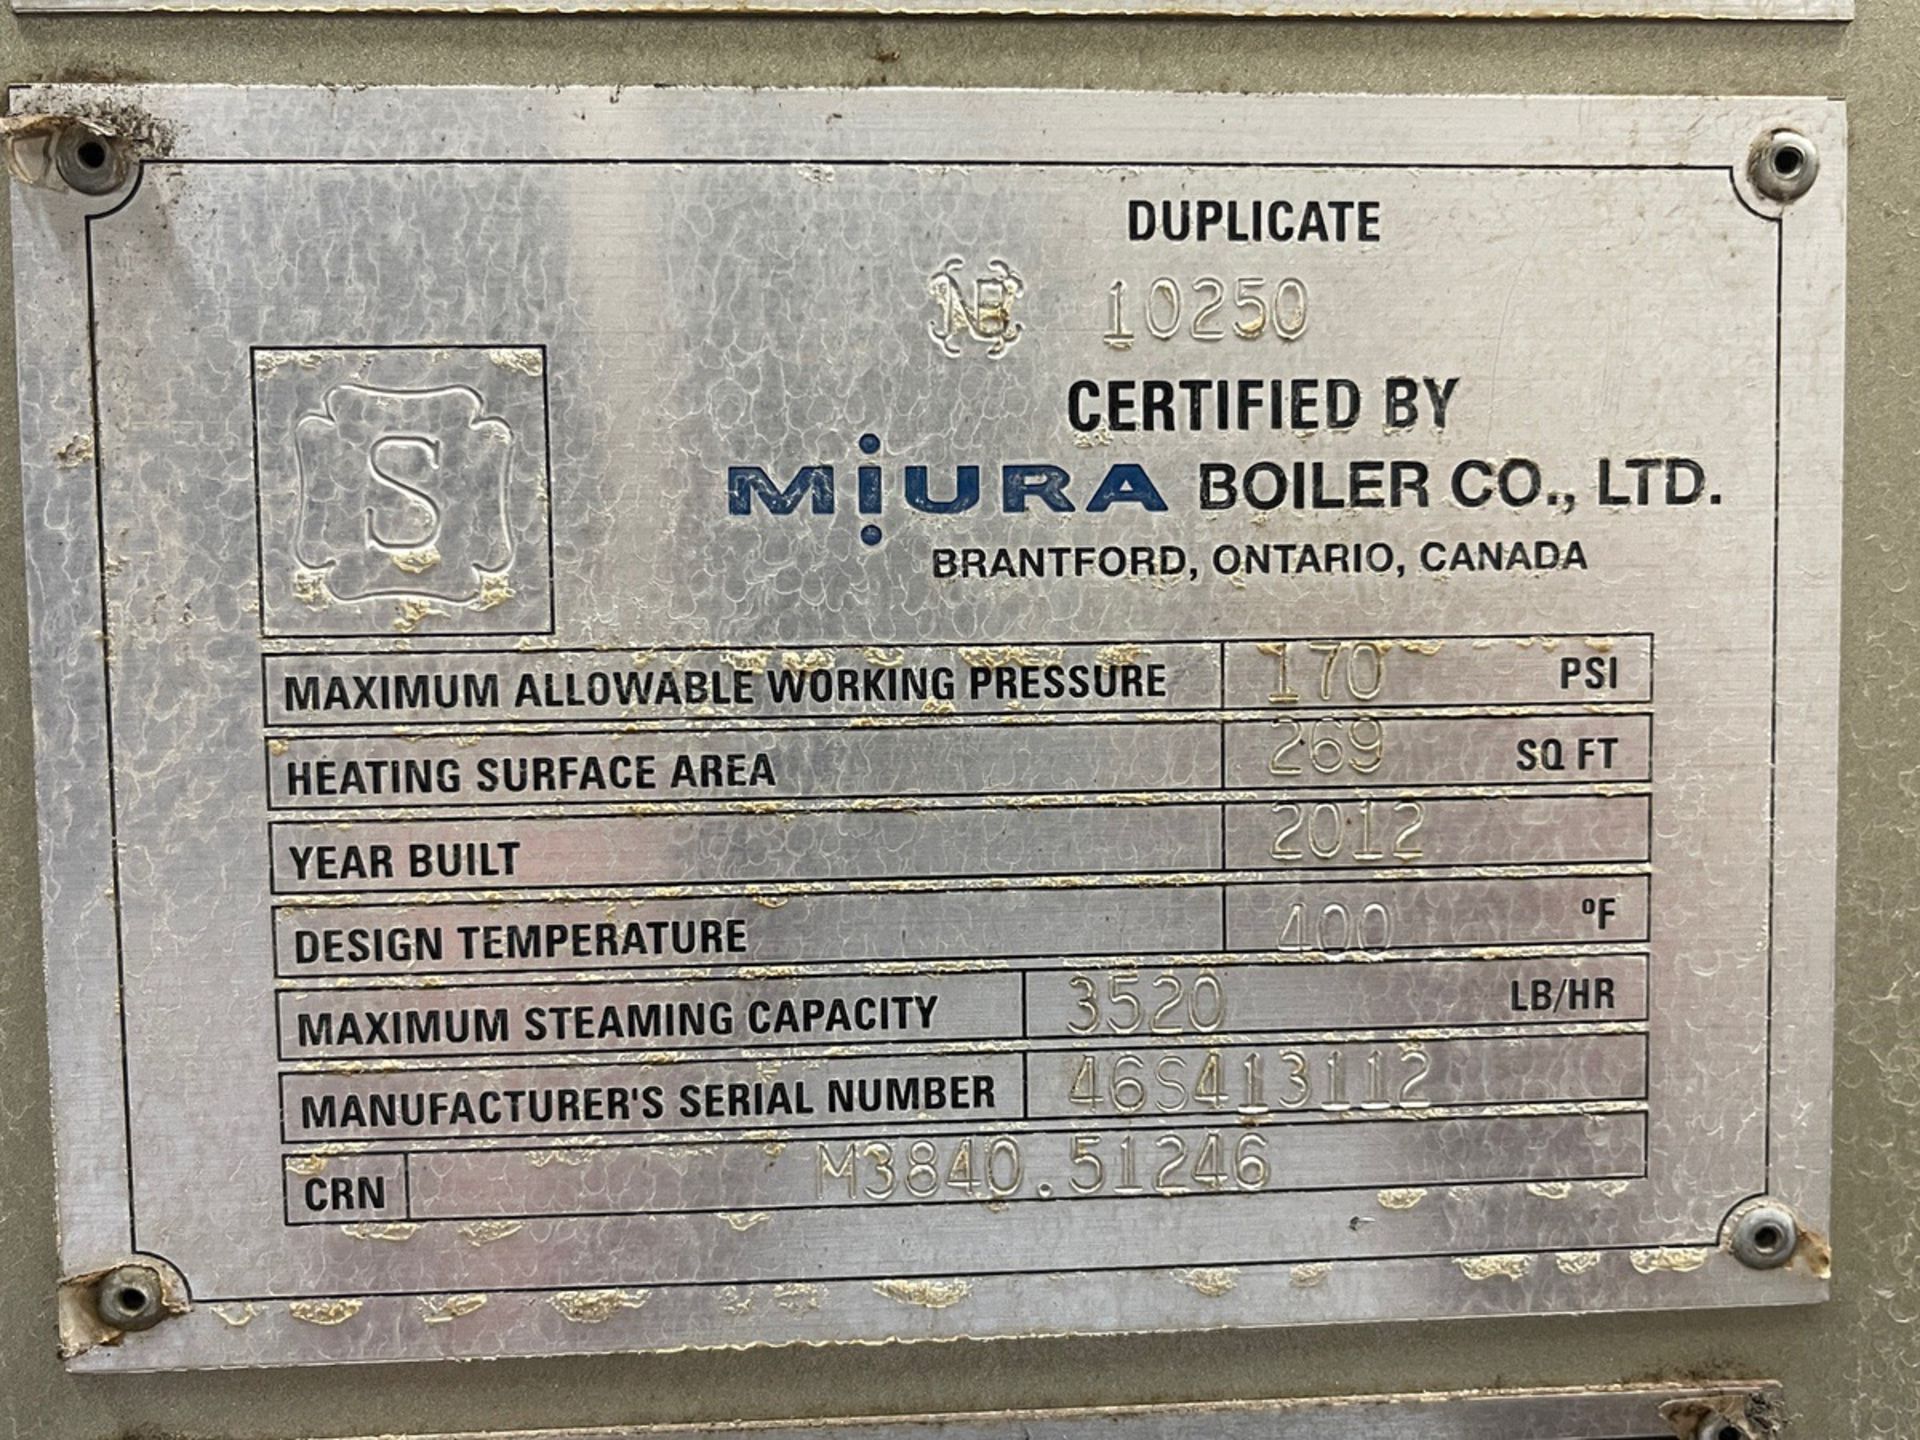 2012 Muira LX-100 Boiler, 3520 LB/HR Maximum Steaming Capacity, 42,000 BTU, Approx. | Rig Fee $1500 - Image 2 of 7